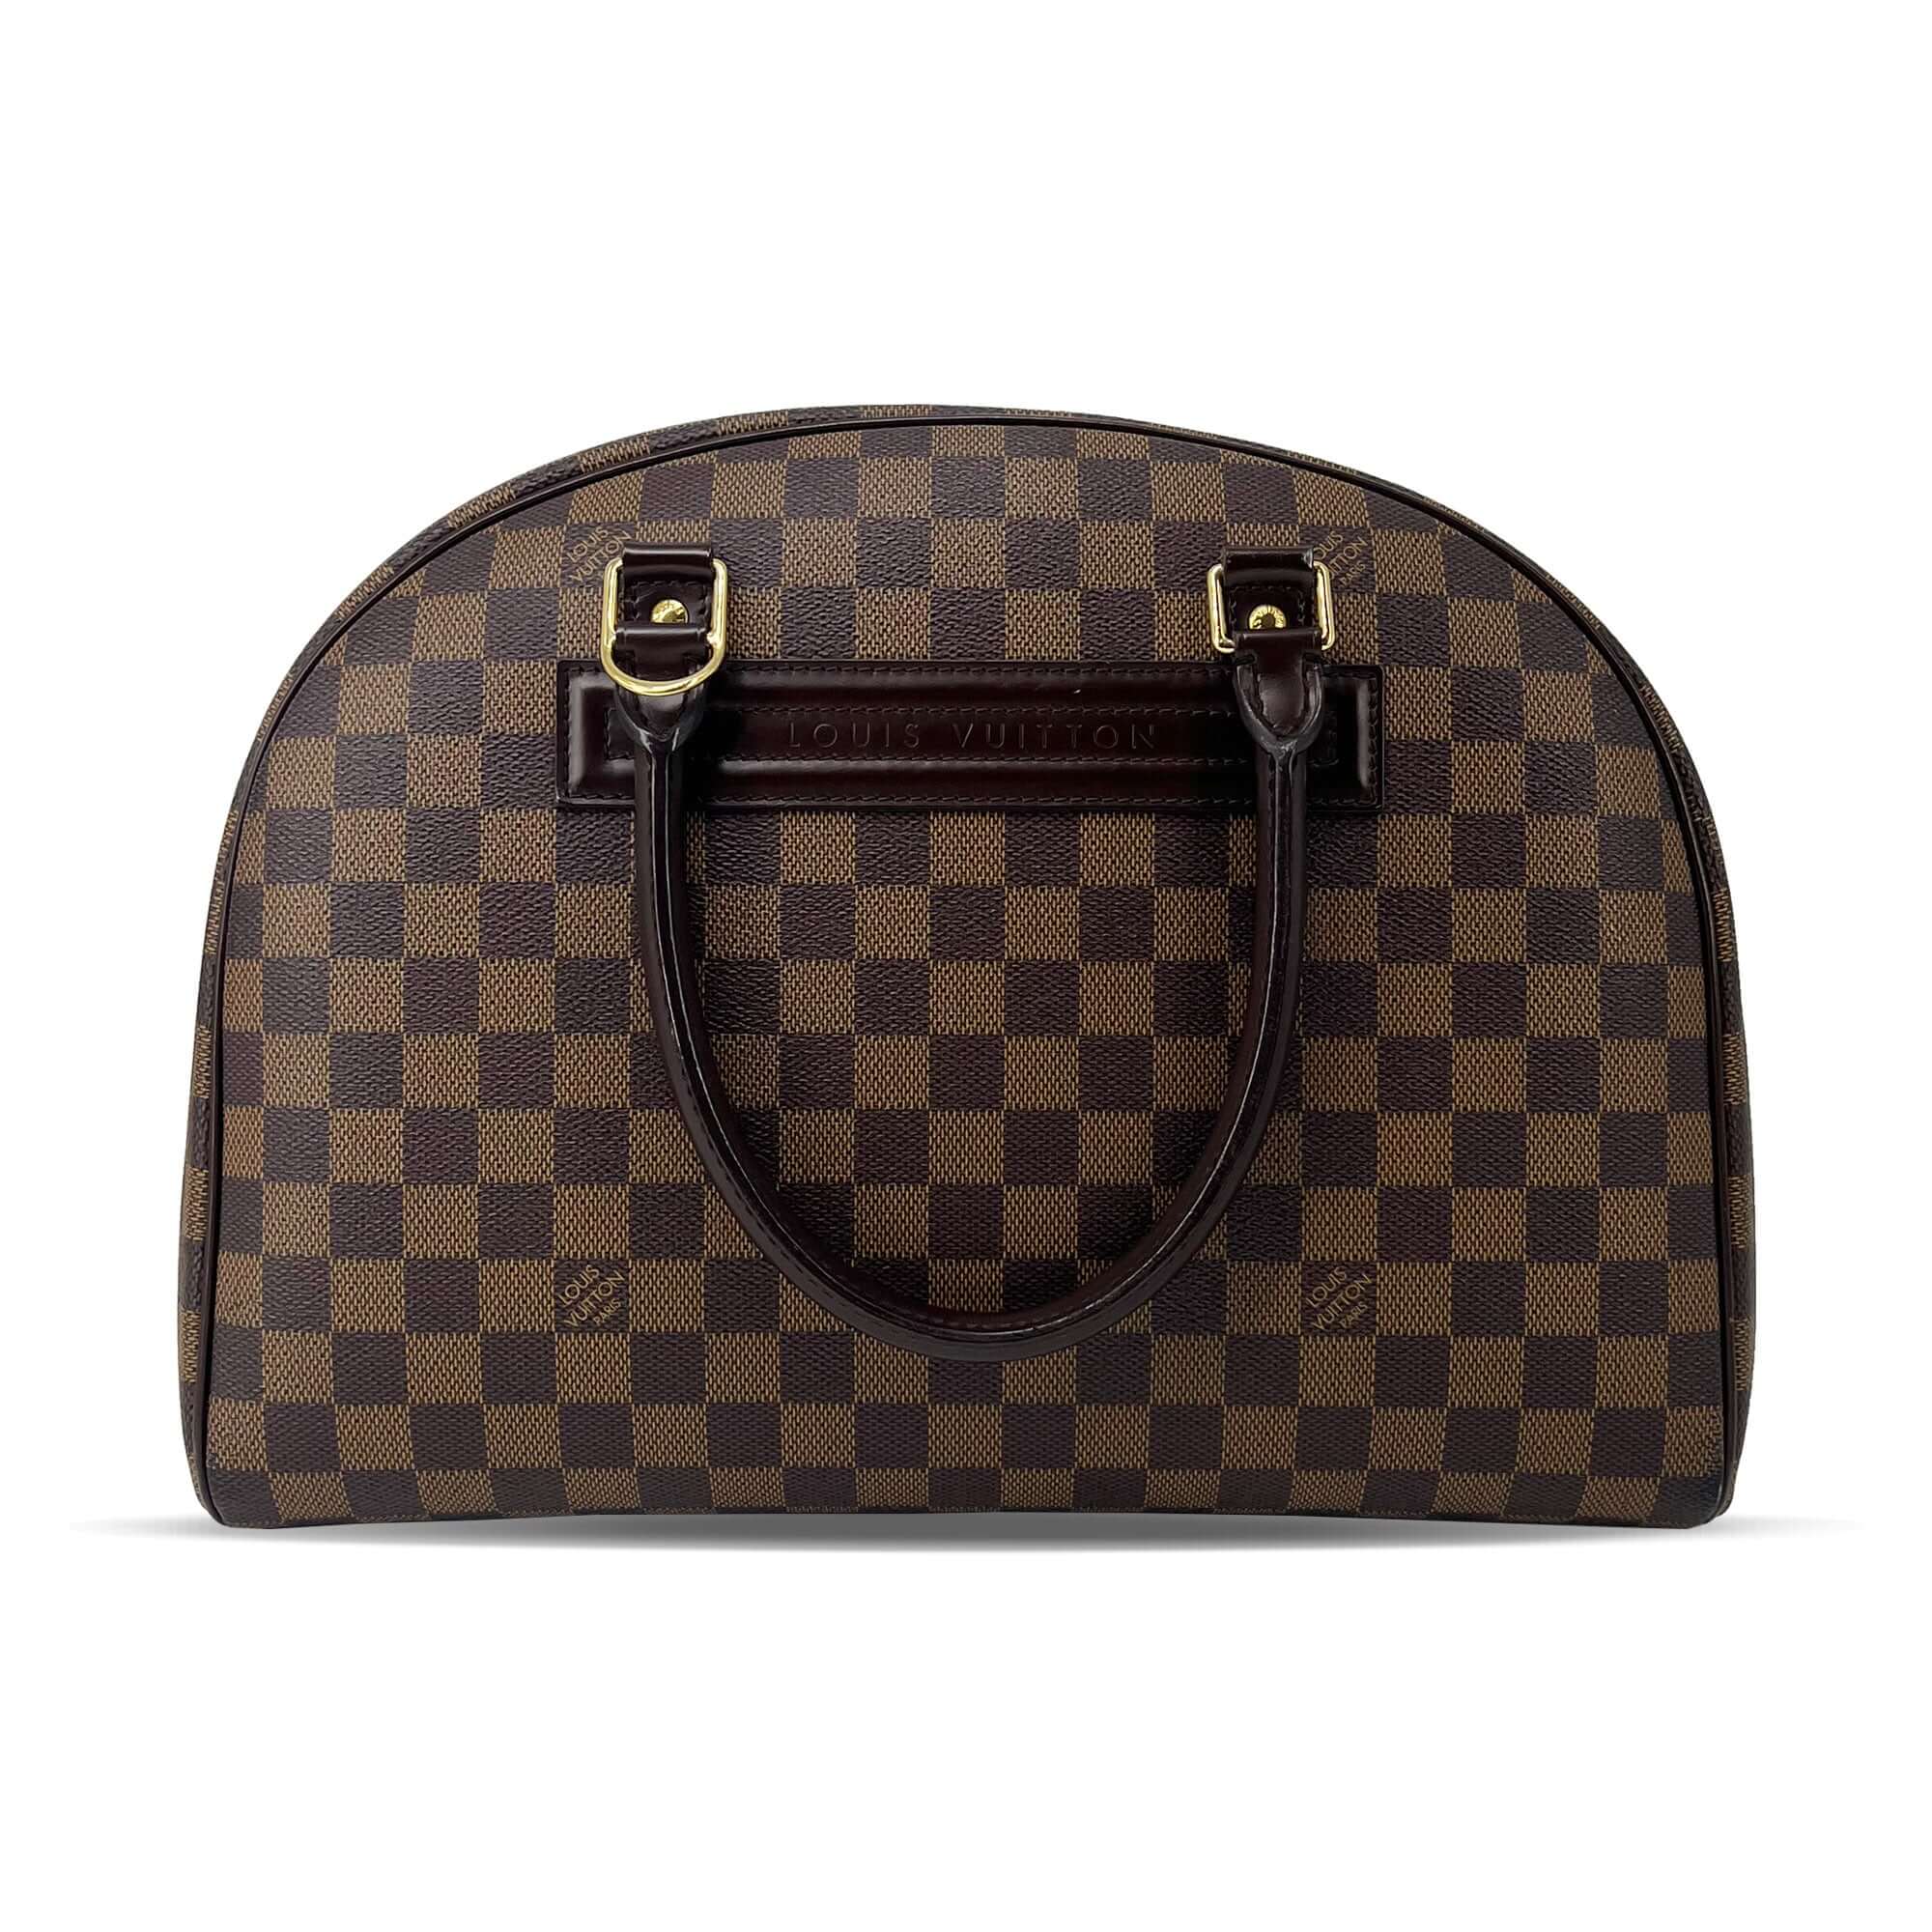 Rare Monogram Louis Vuitton Nolita Handbag